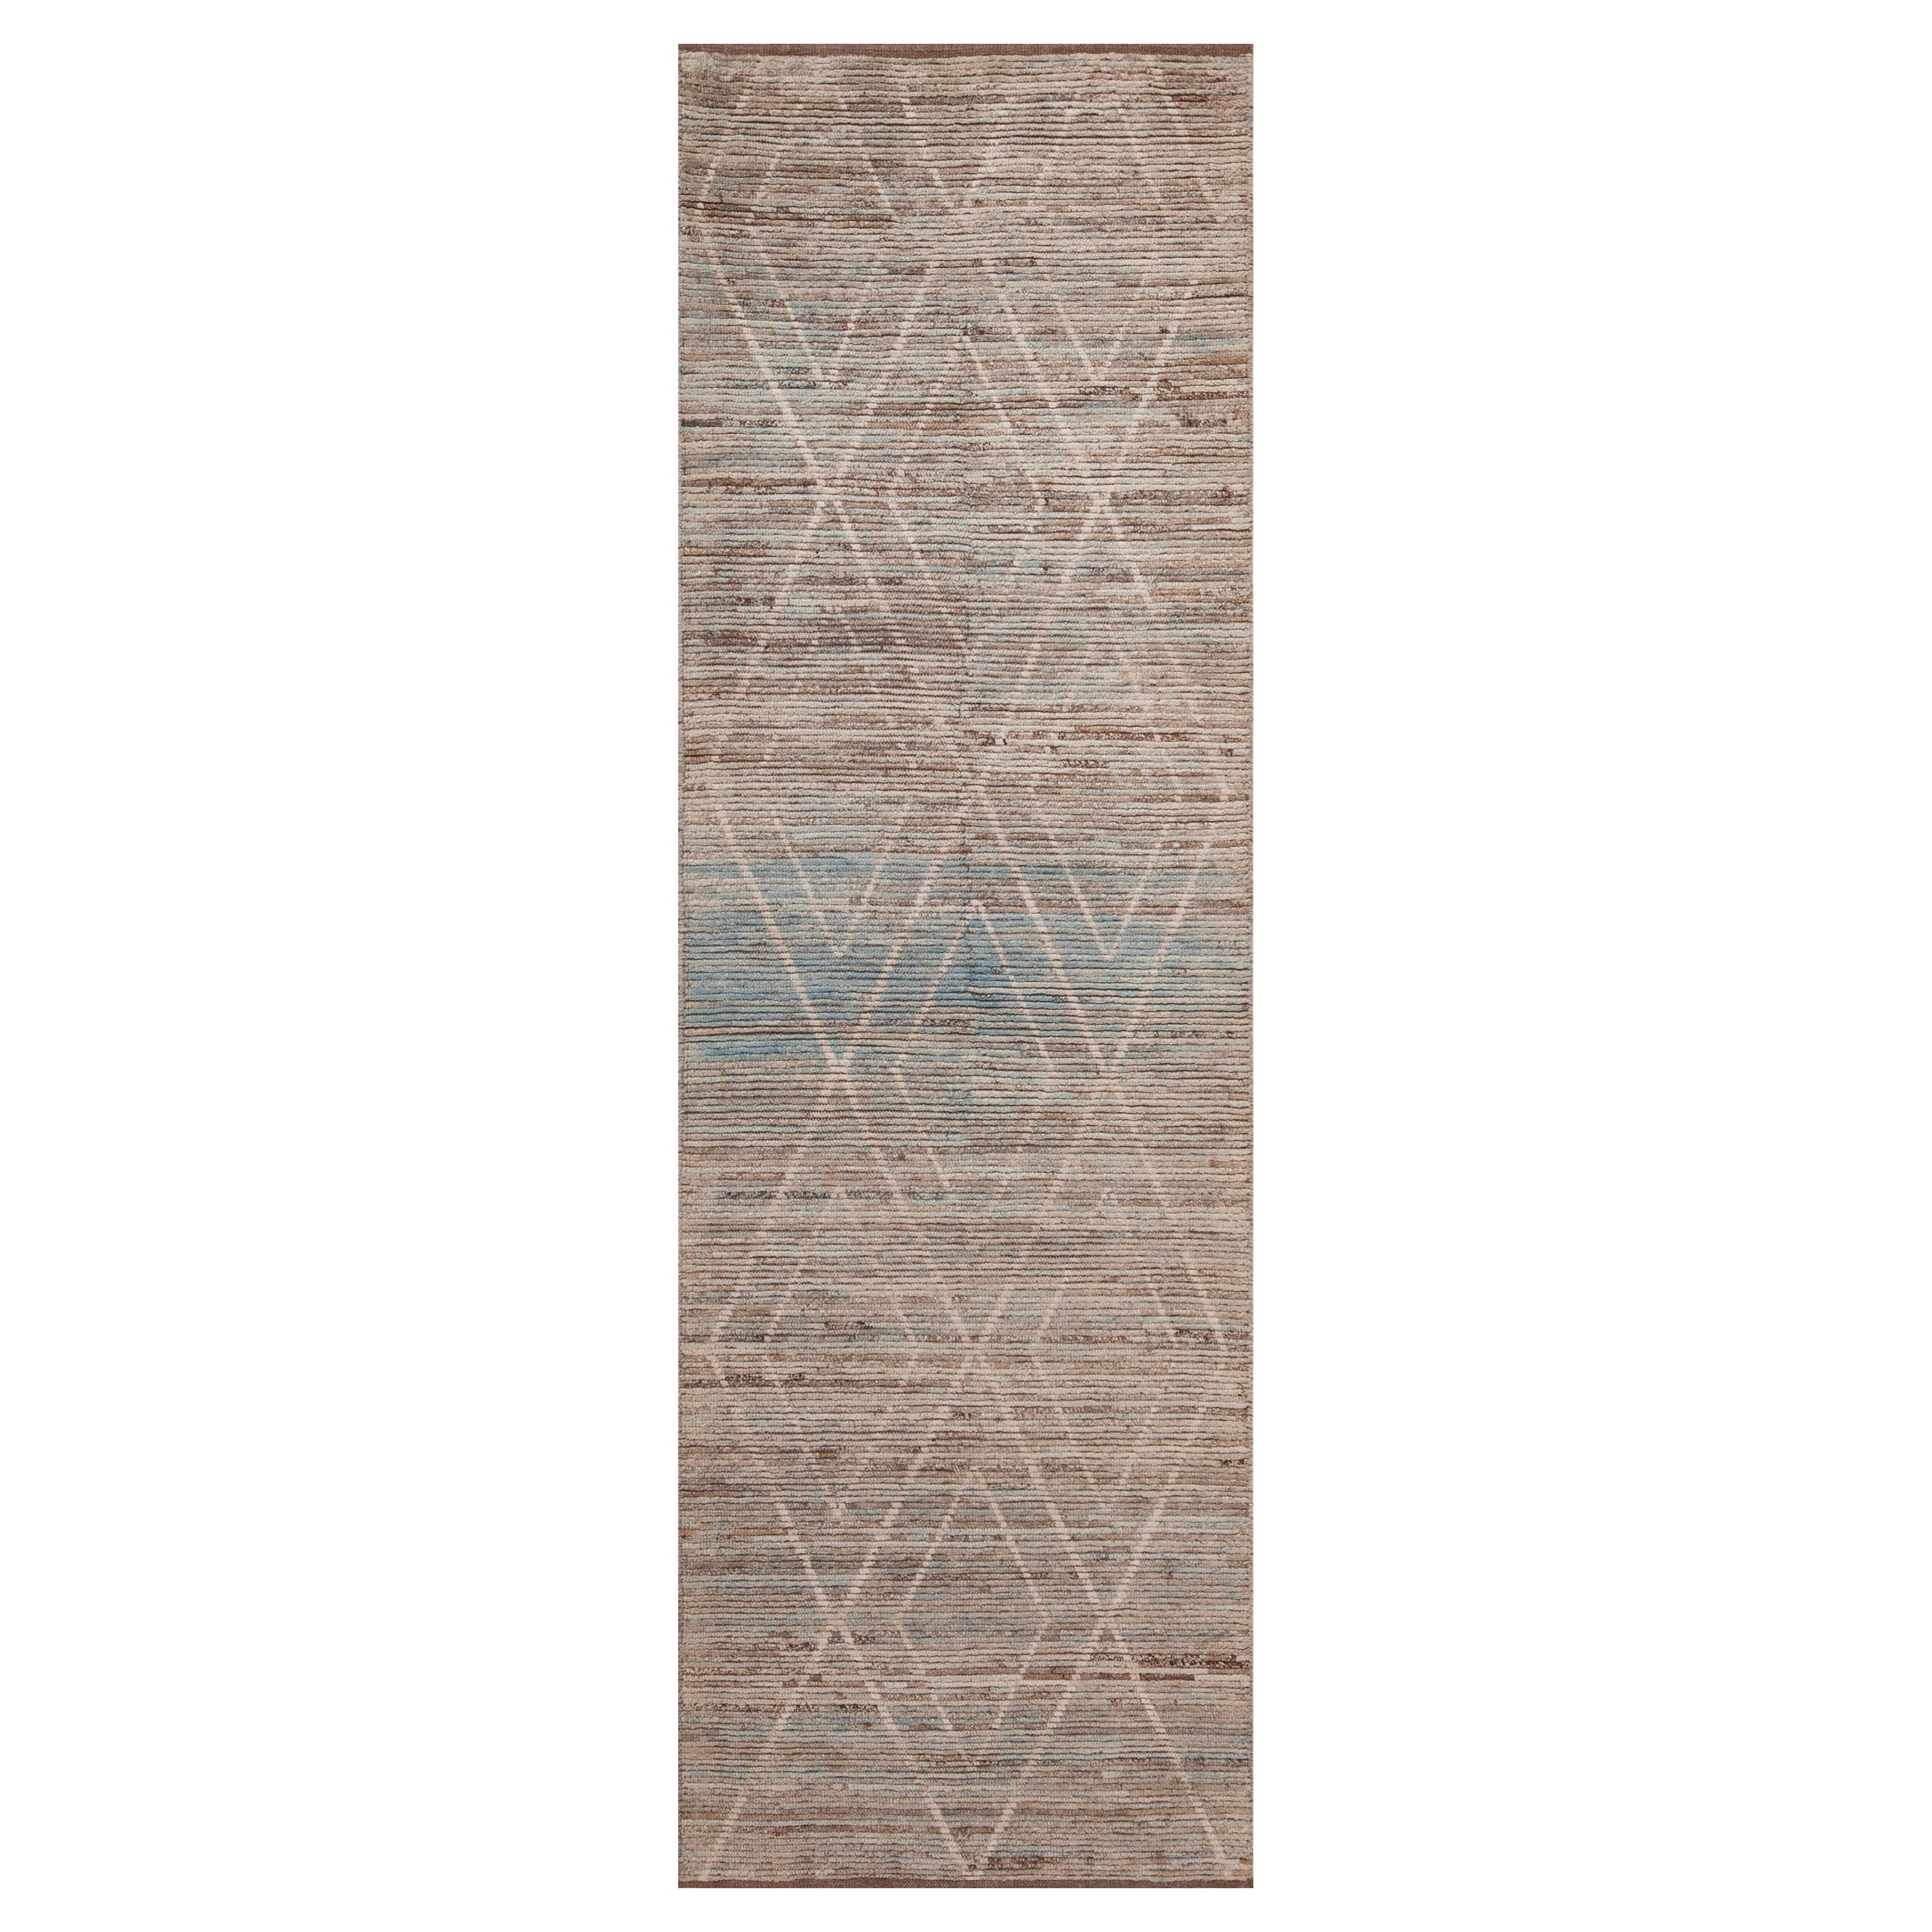 Nazmiyal Collection Tribal Geometric Beni Ourain Modern Runner Rug 3' x 9'8"